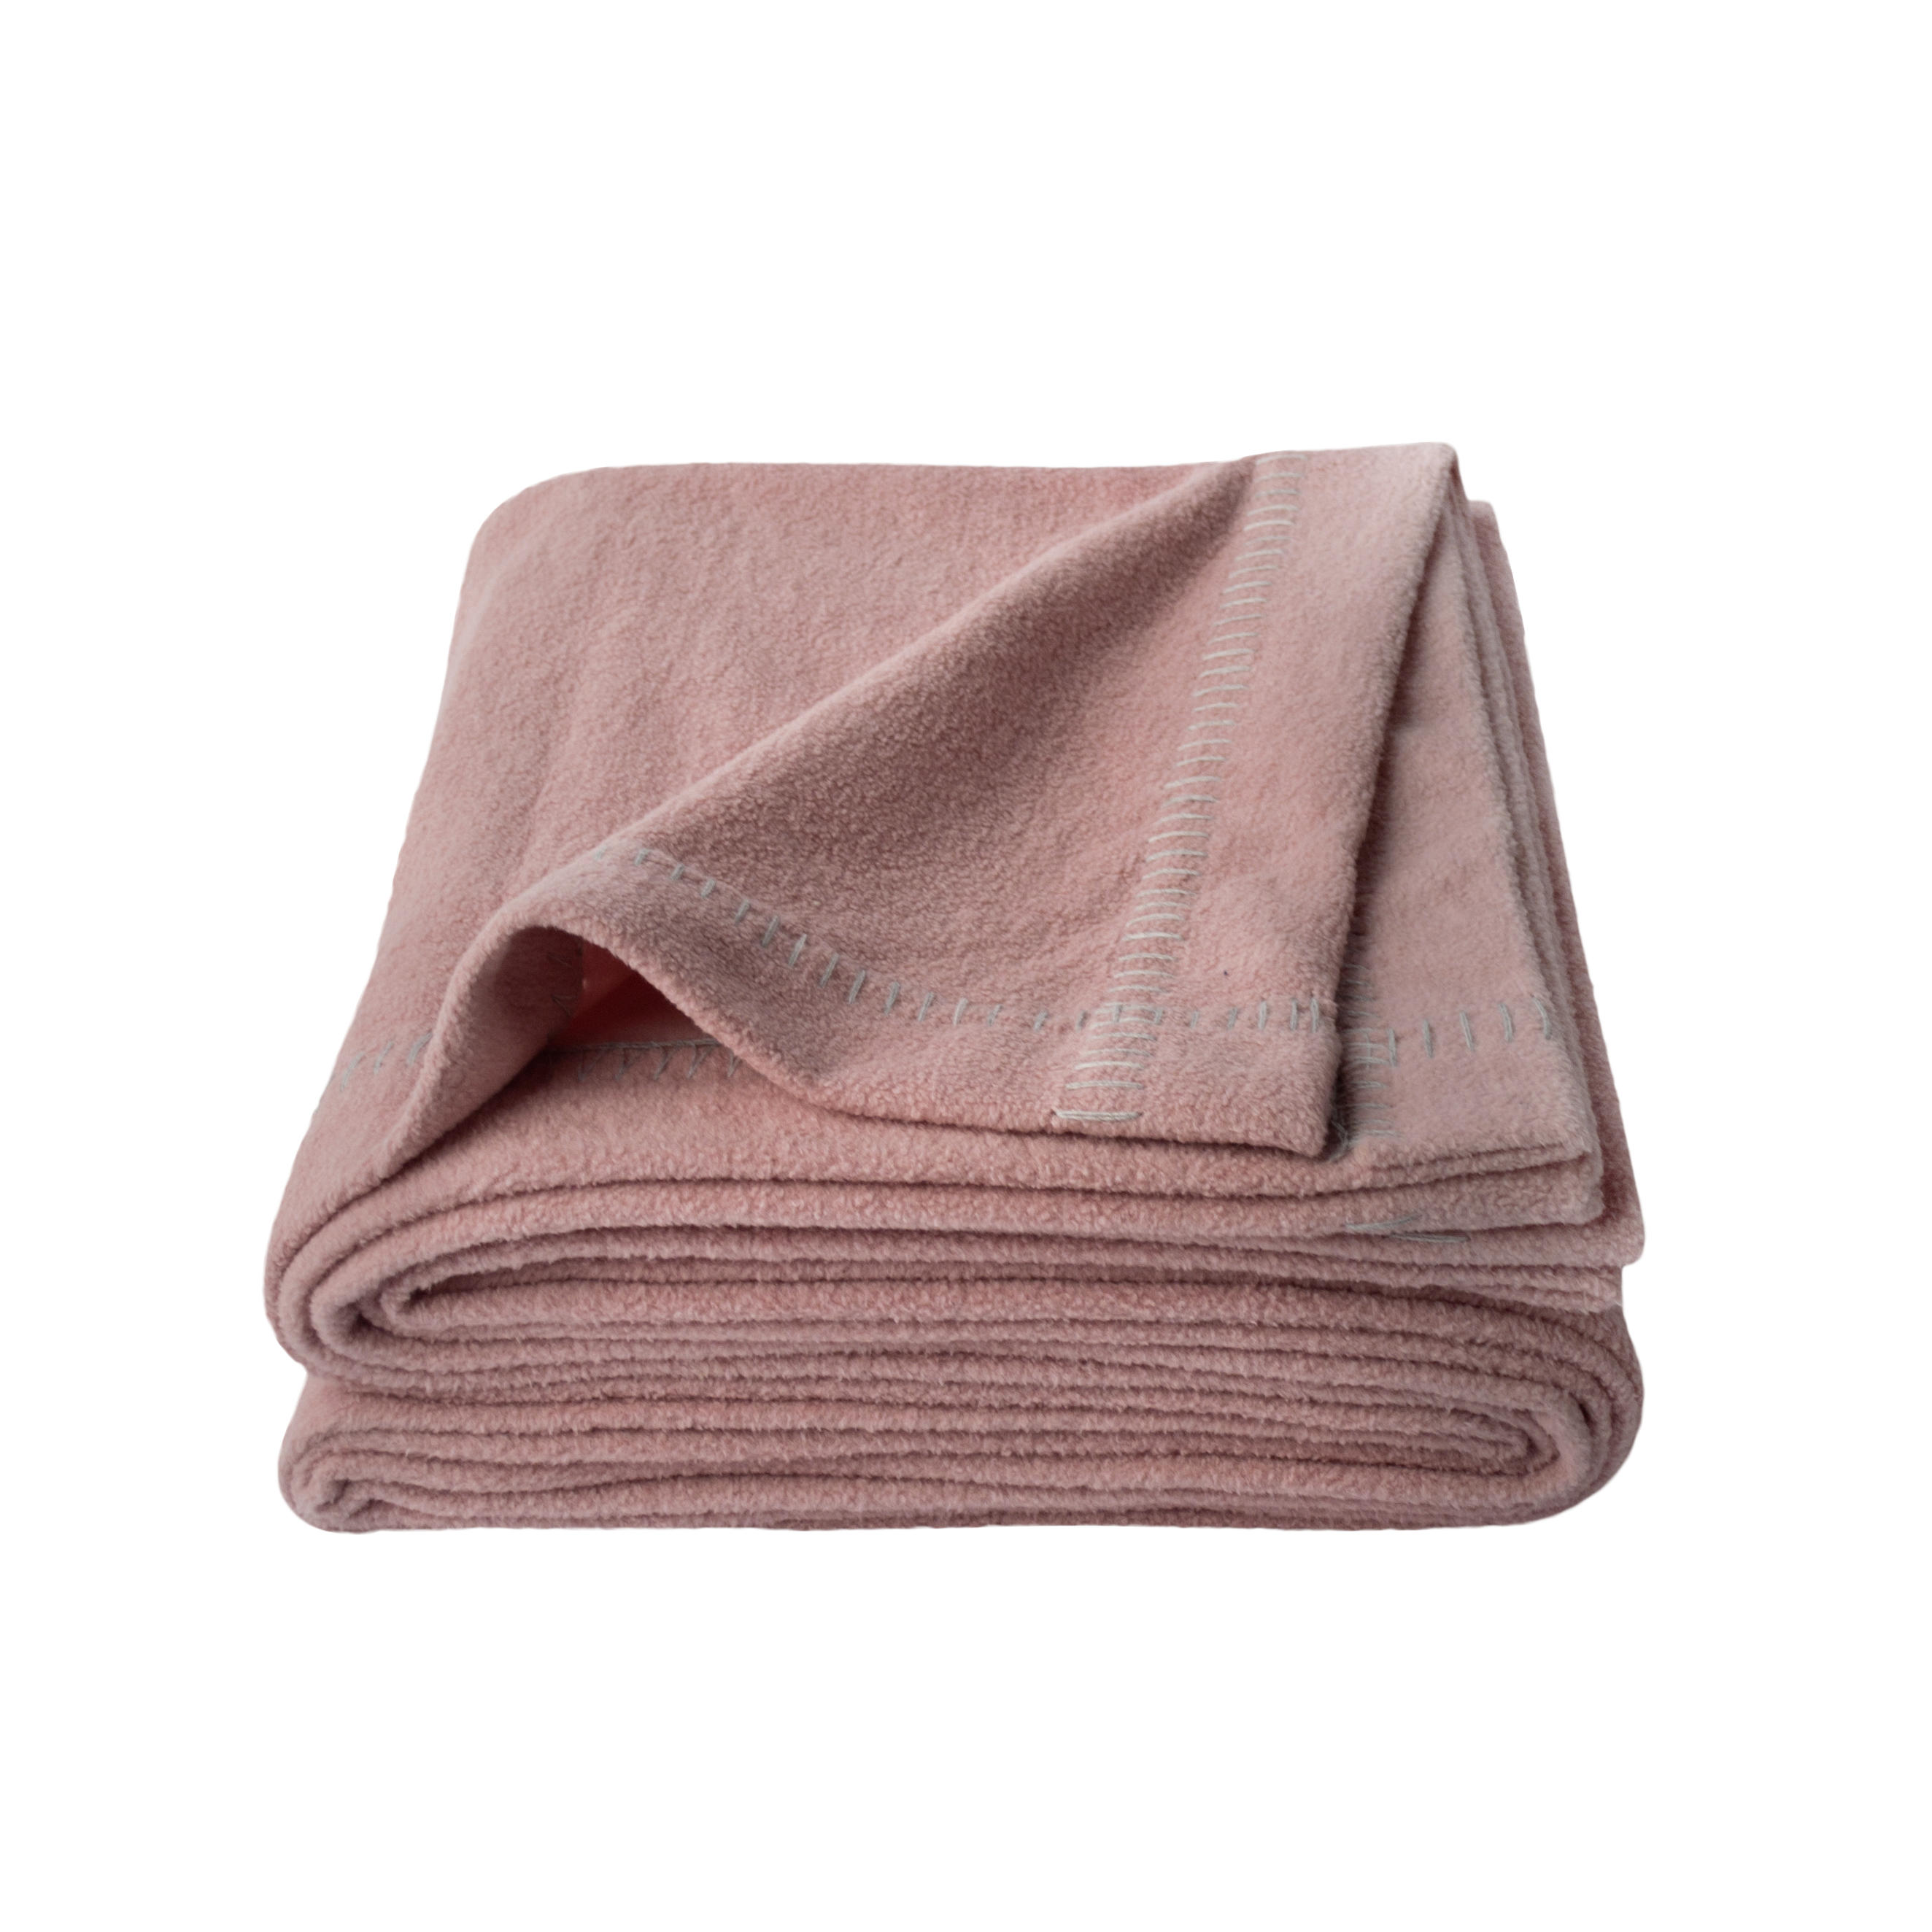 FLEECEDECKE Soft Greeny  - Altrosa/Rosa, KONVENTIONELL, Textil (140/190cm) - Zoeppritz